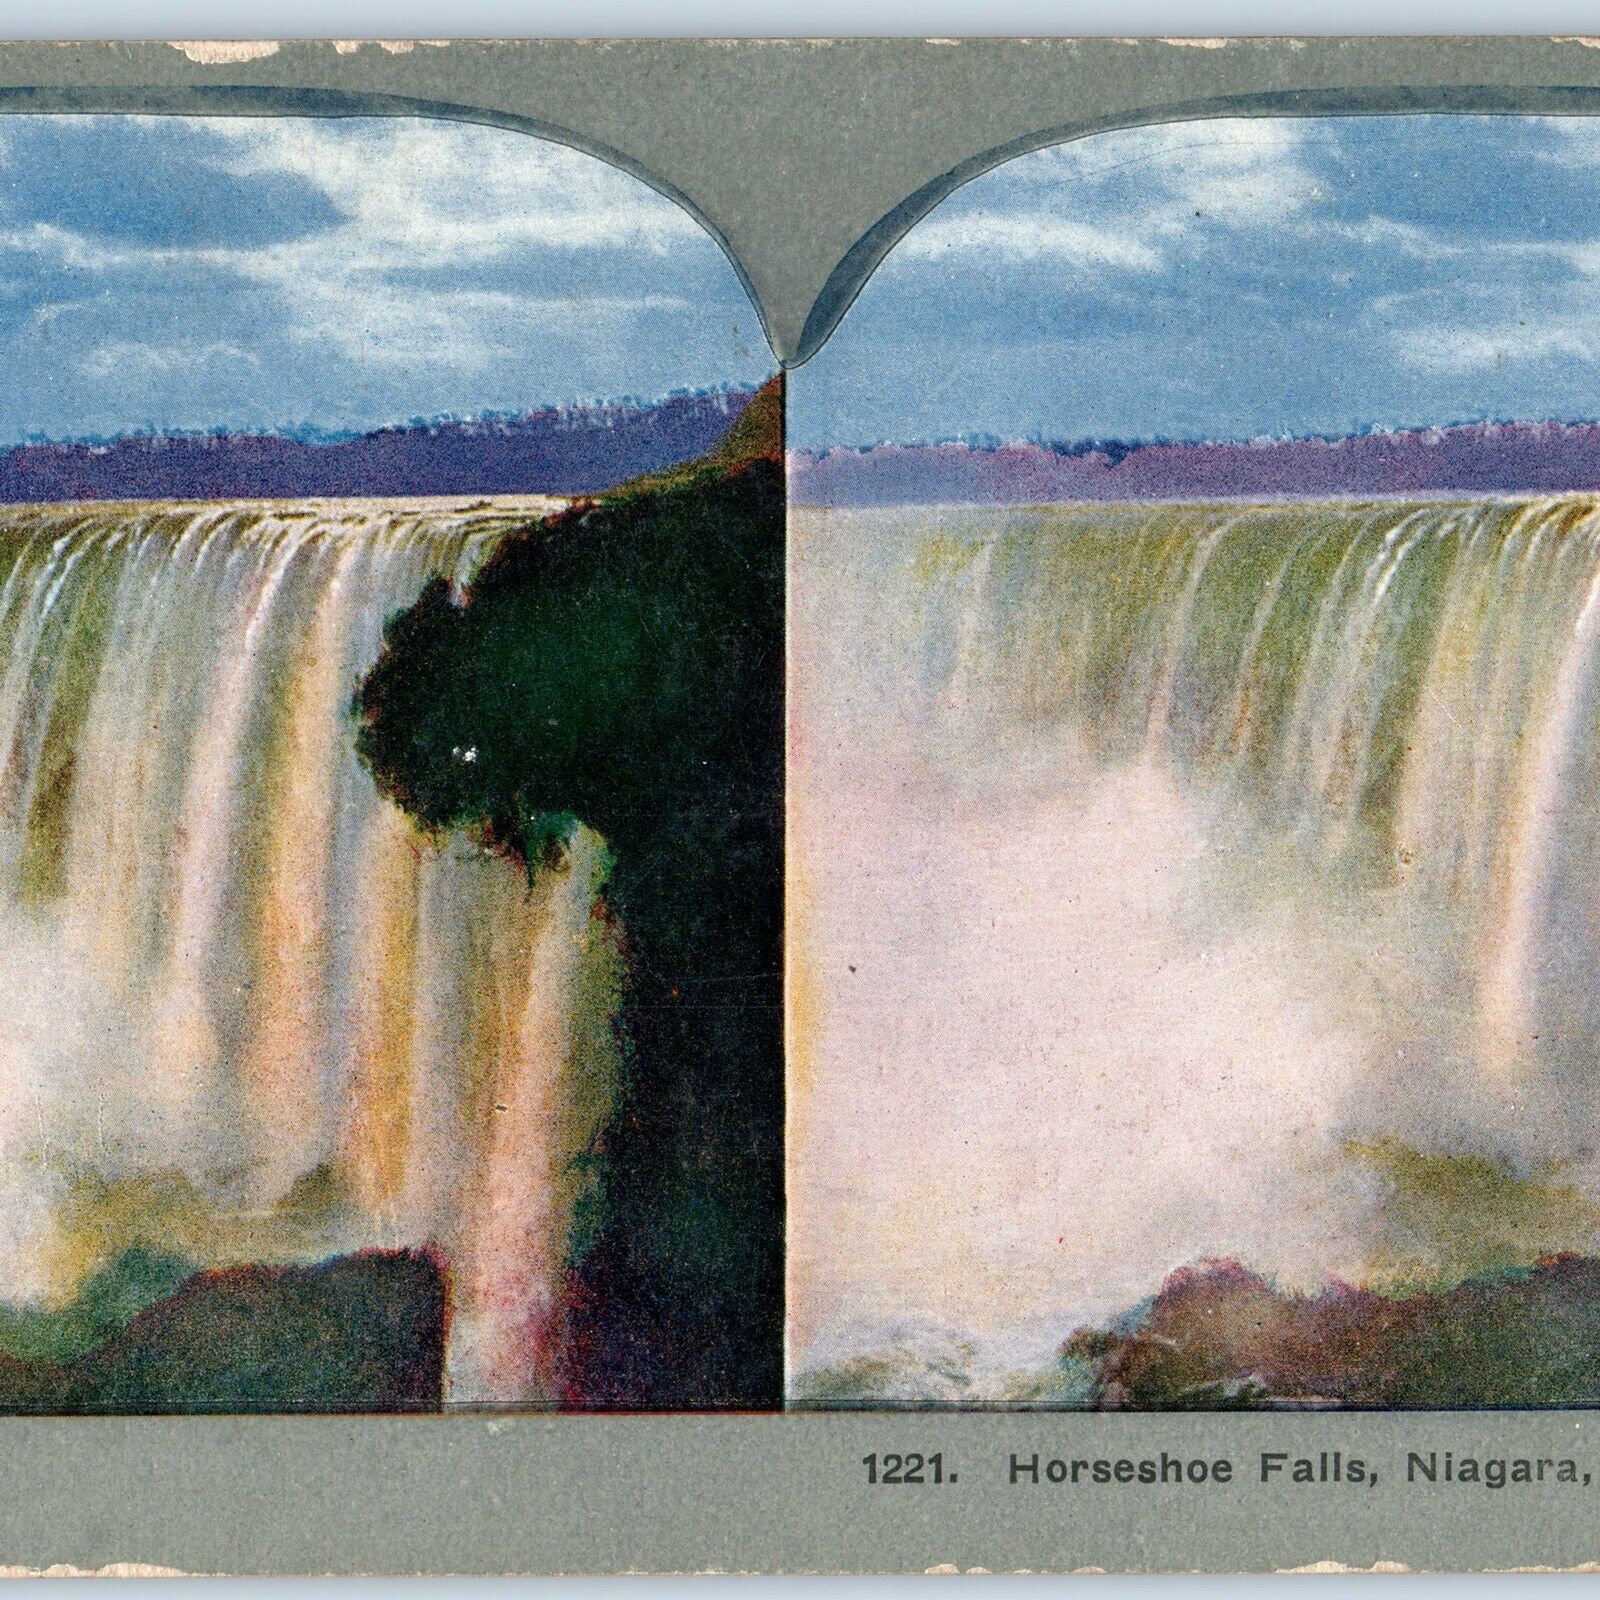 c1900s Niagara Falls Horseshoe Falls from Above Litho Photo Stereo Card V8